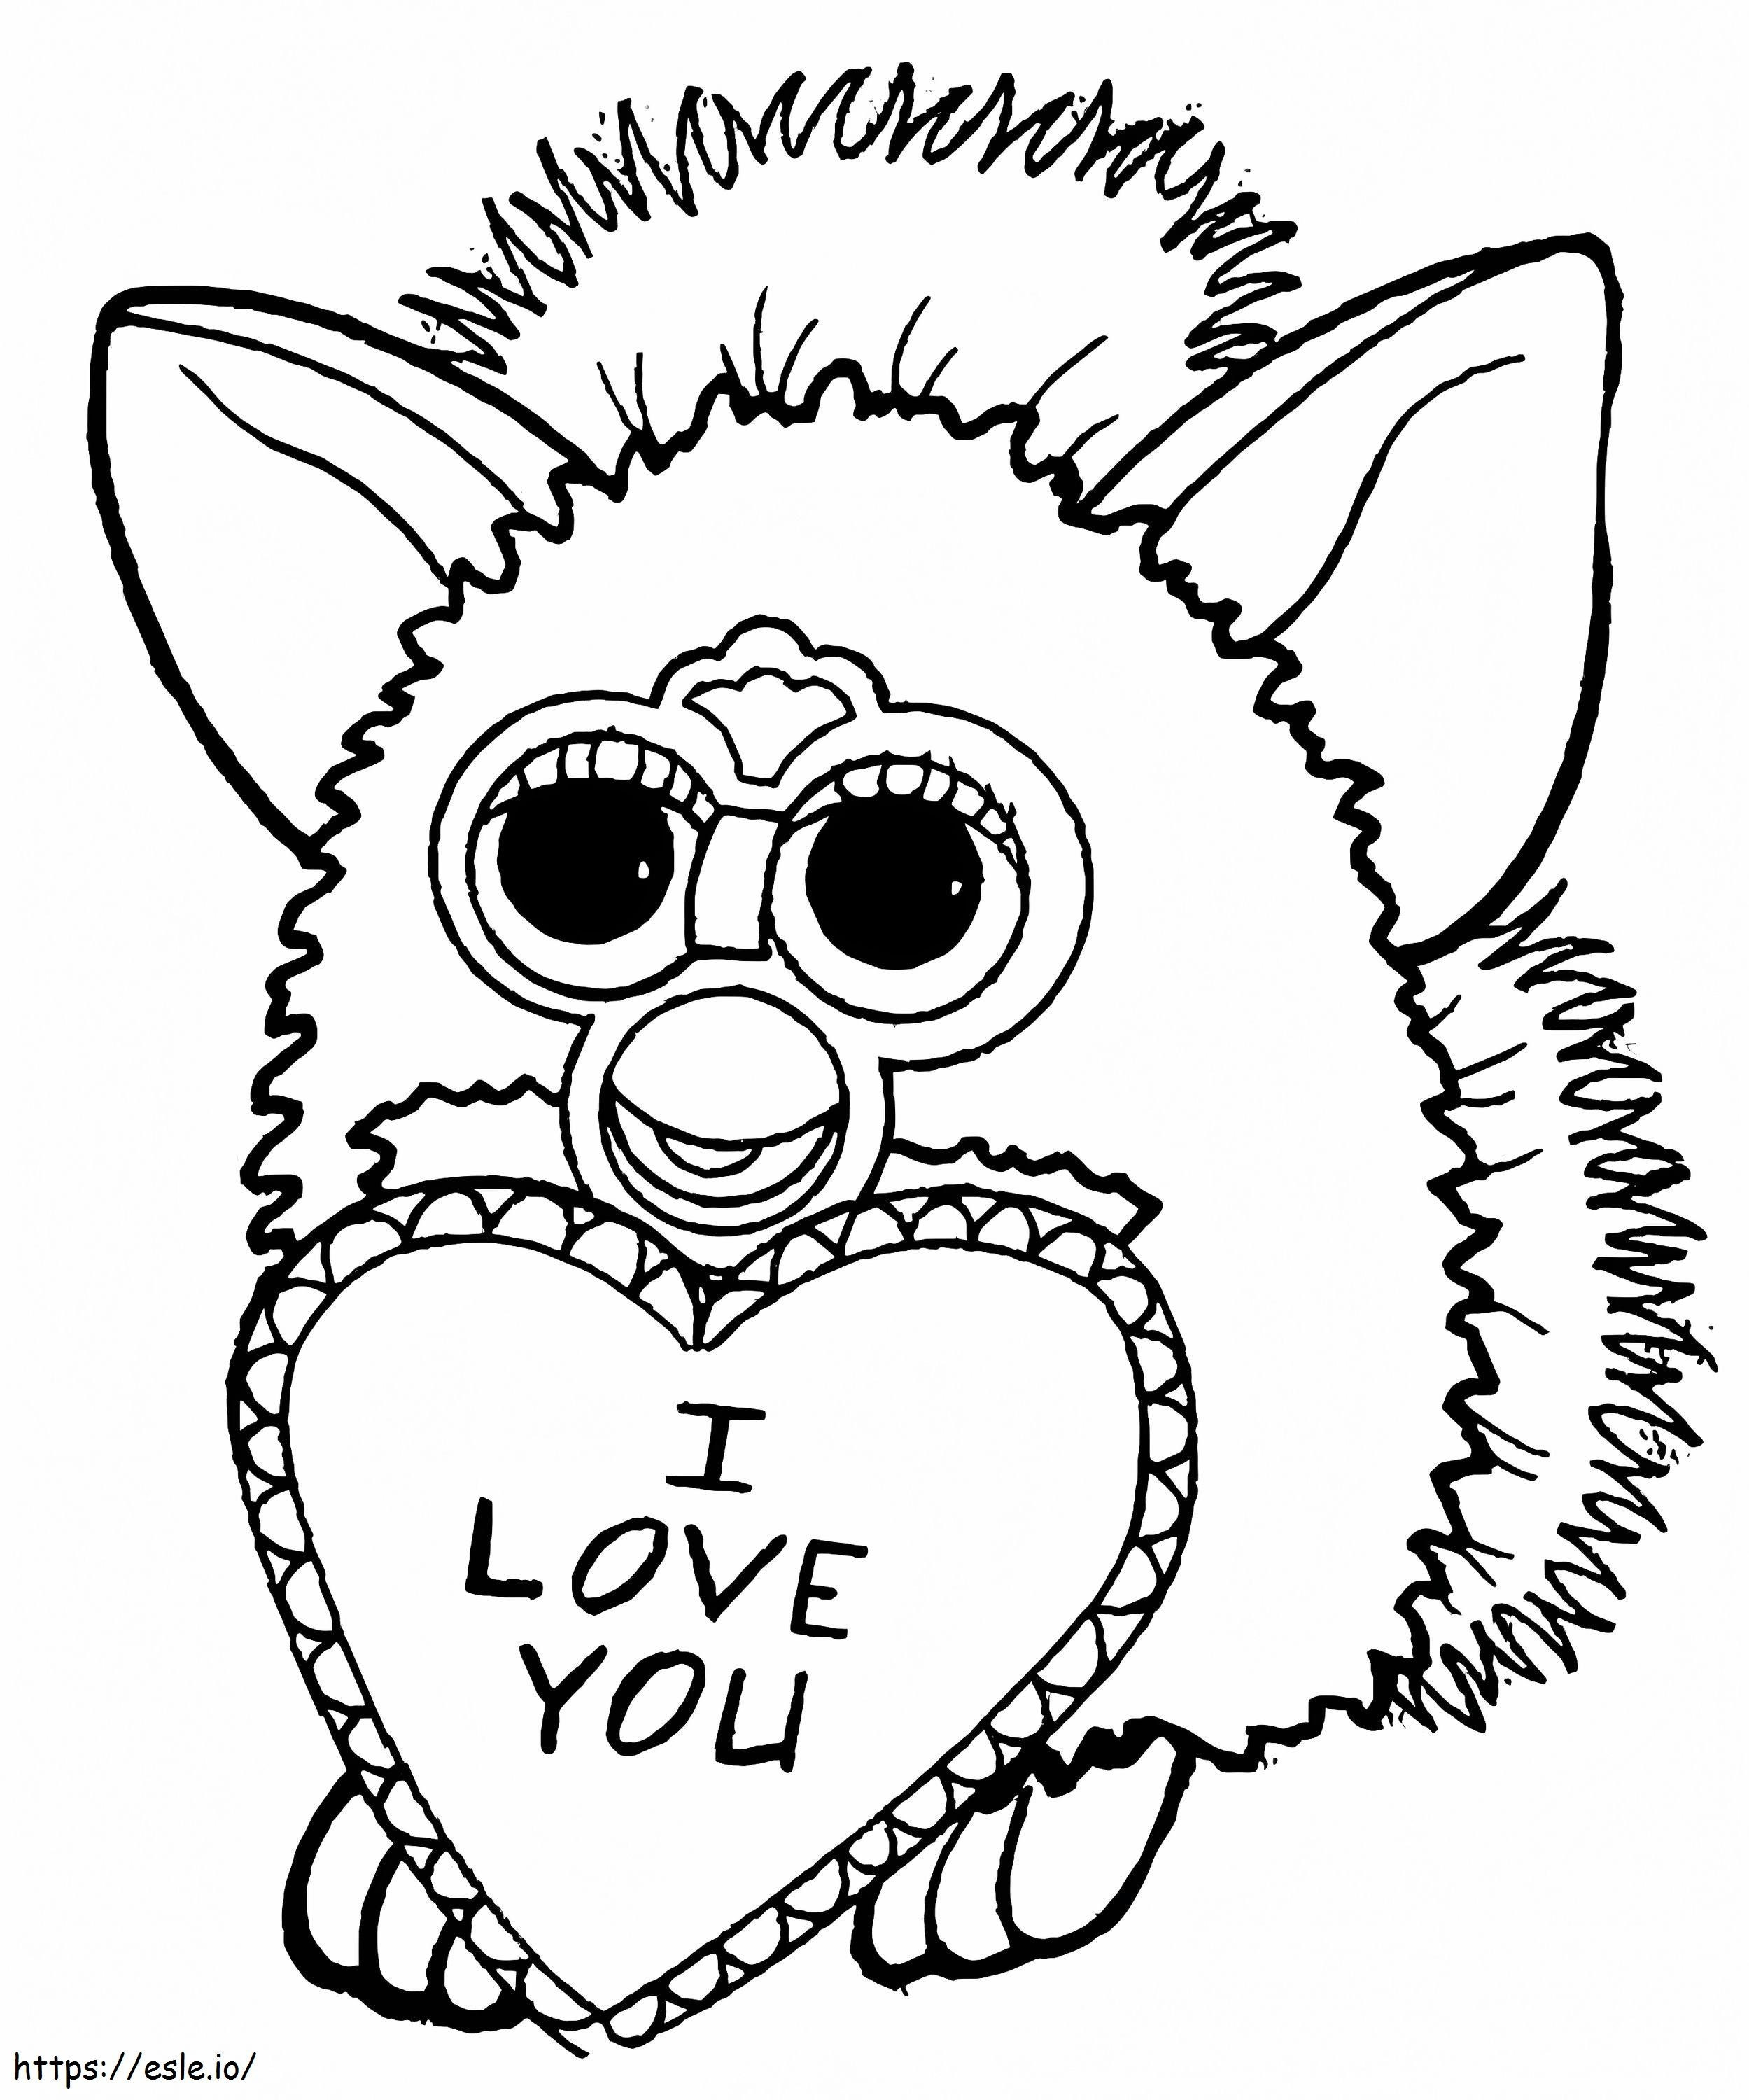 Eu te amo Furby para colorir